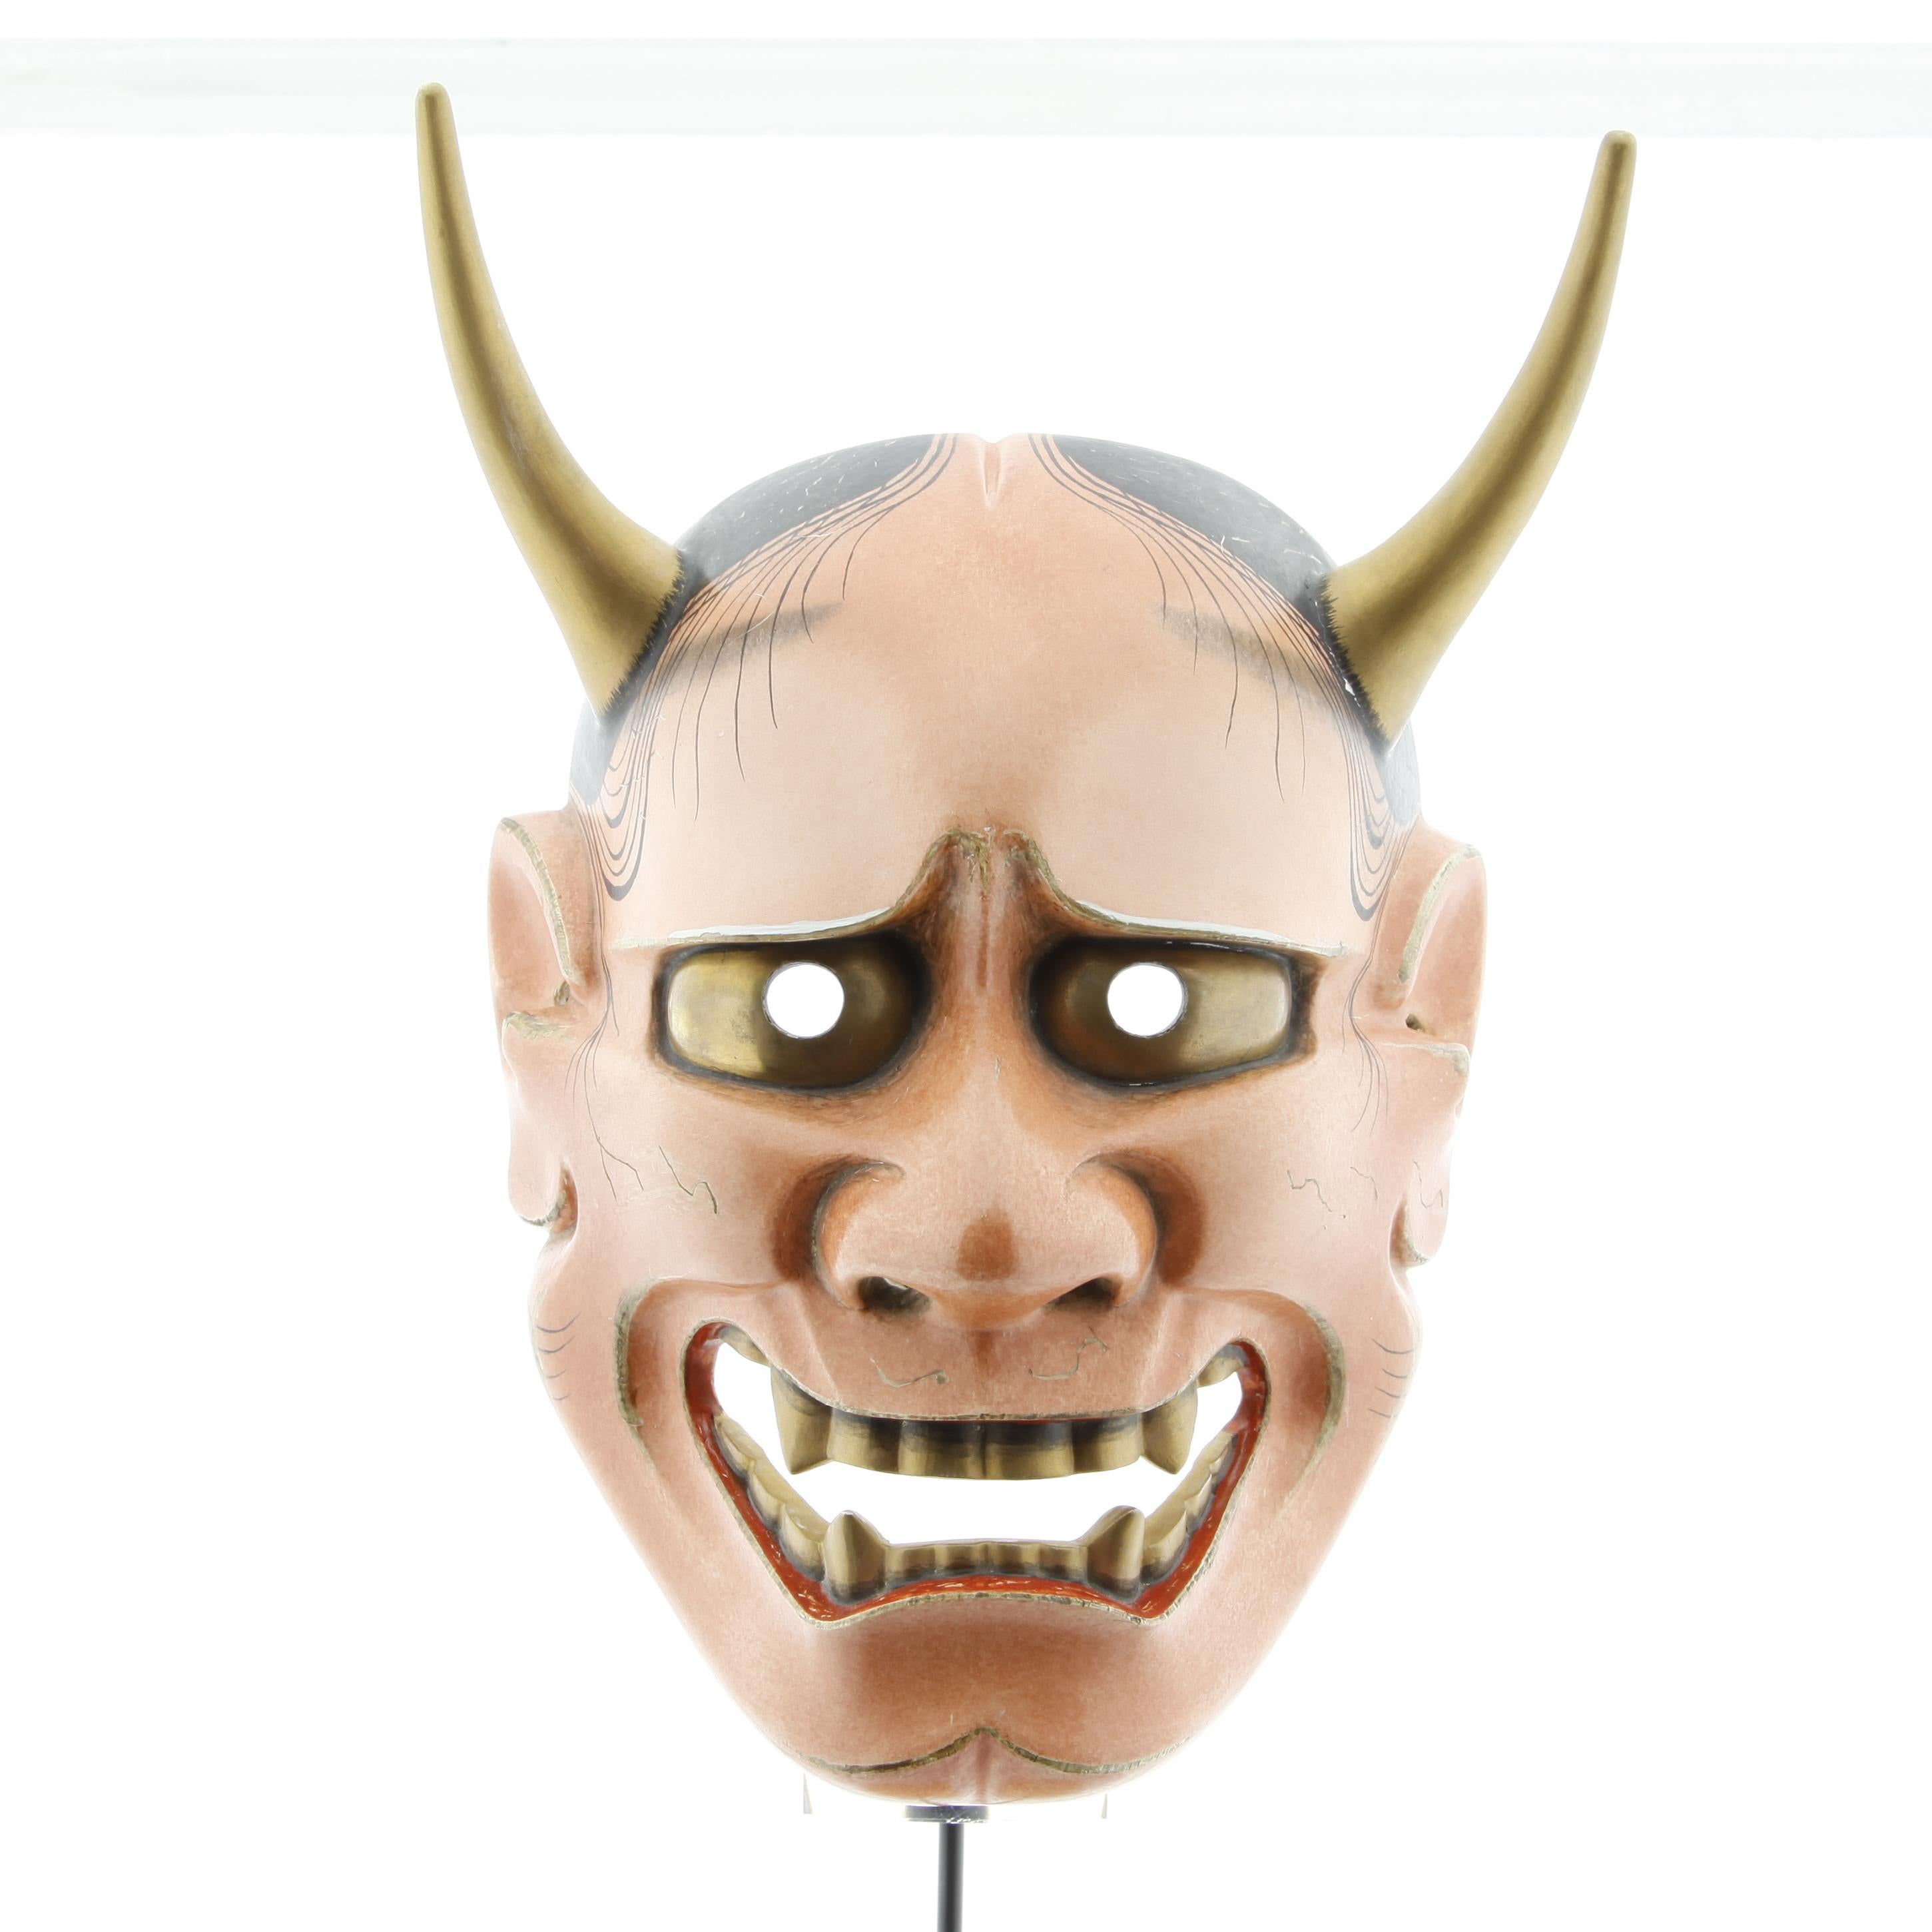 Hannya Noh Mask, Demon, Japanese Theatre, 20th Century, Woodcraft, Handmade - Mixed Media Art by Unknown